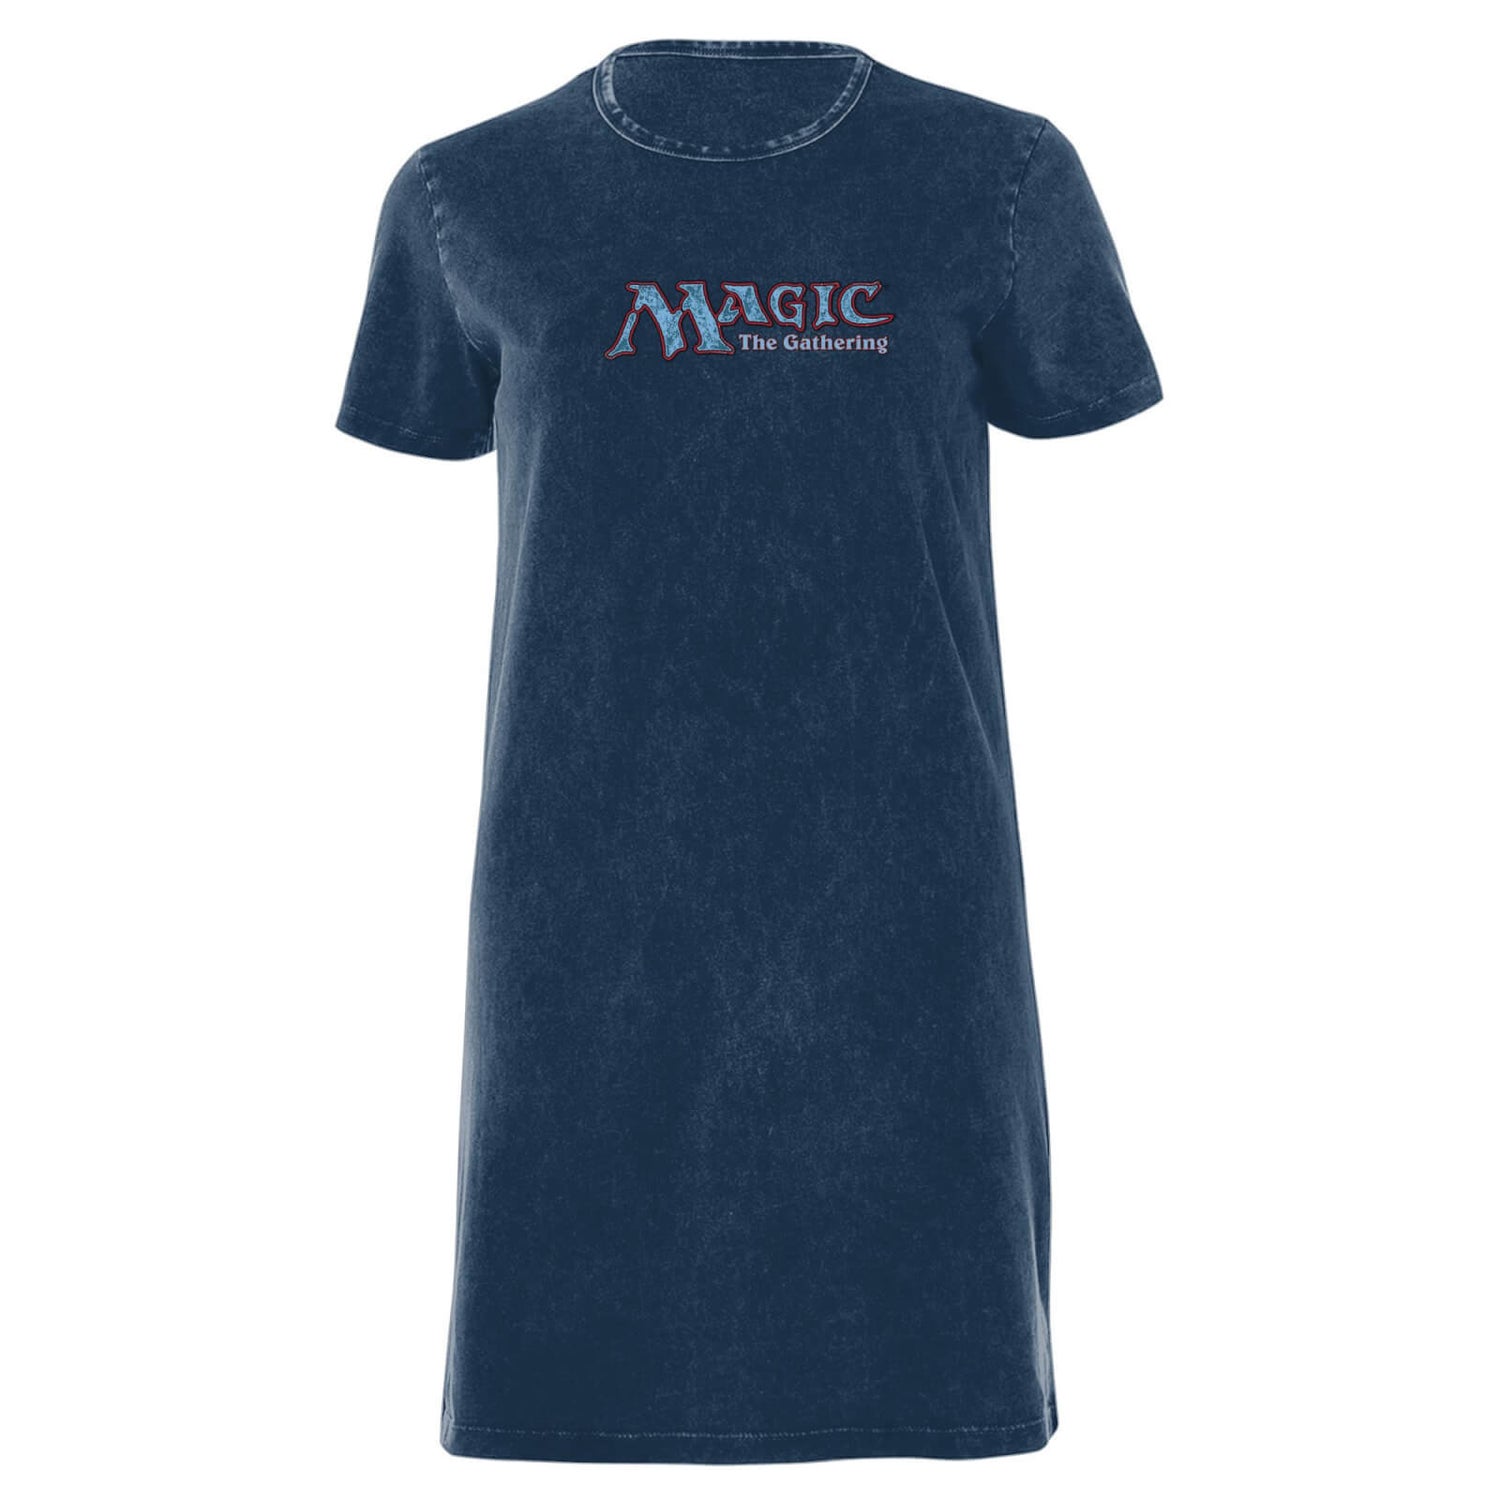 Magic: the Gathering Retro Logo Women's T-Shirt Dress - Navy Acid Wash